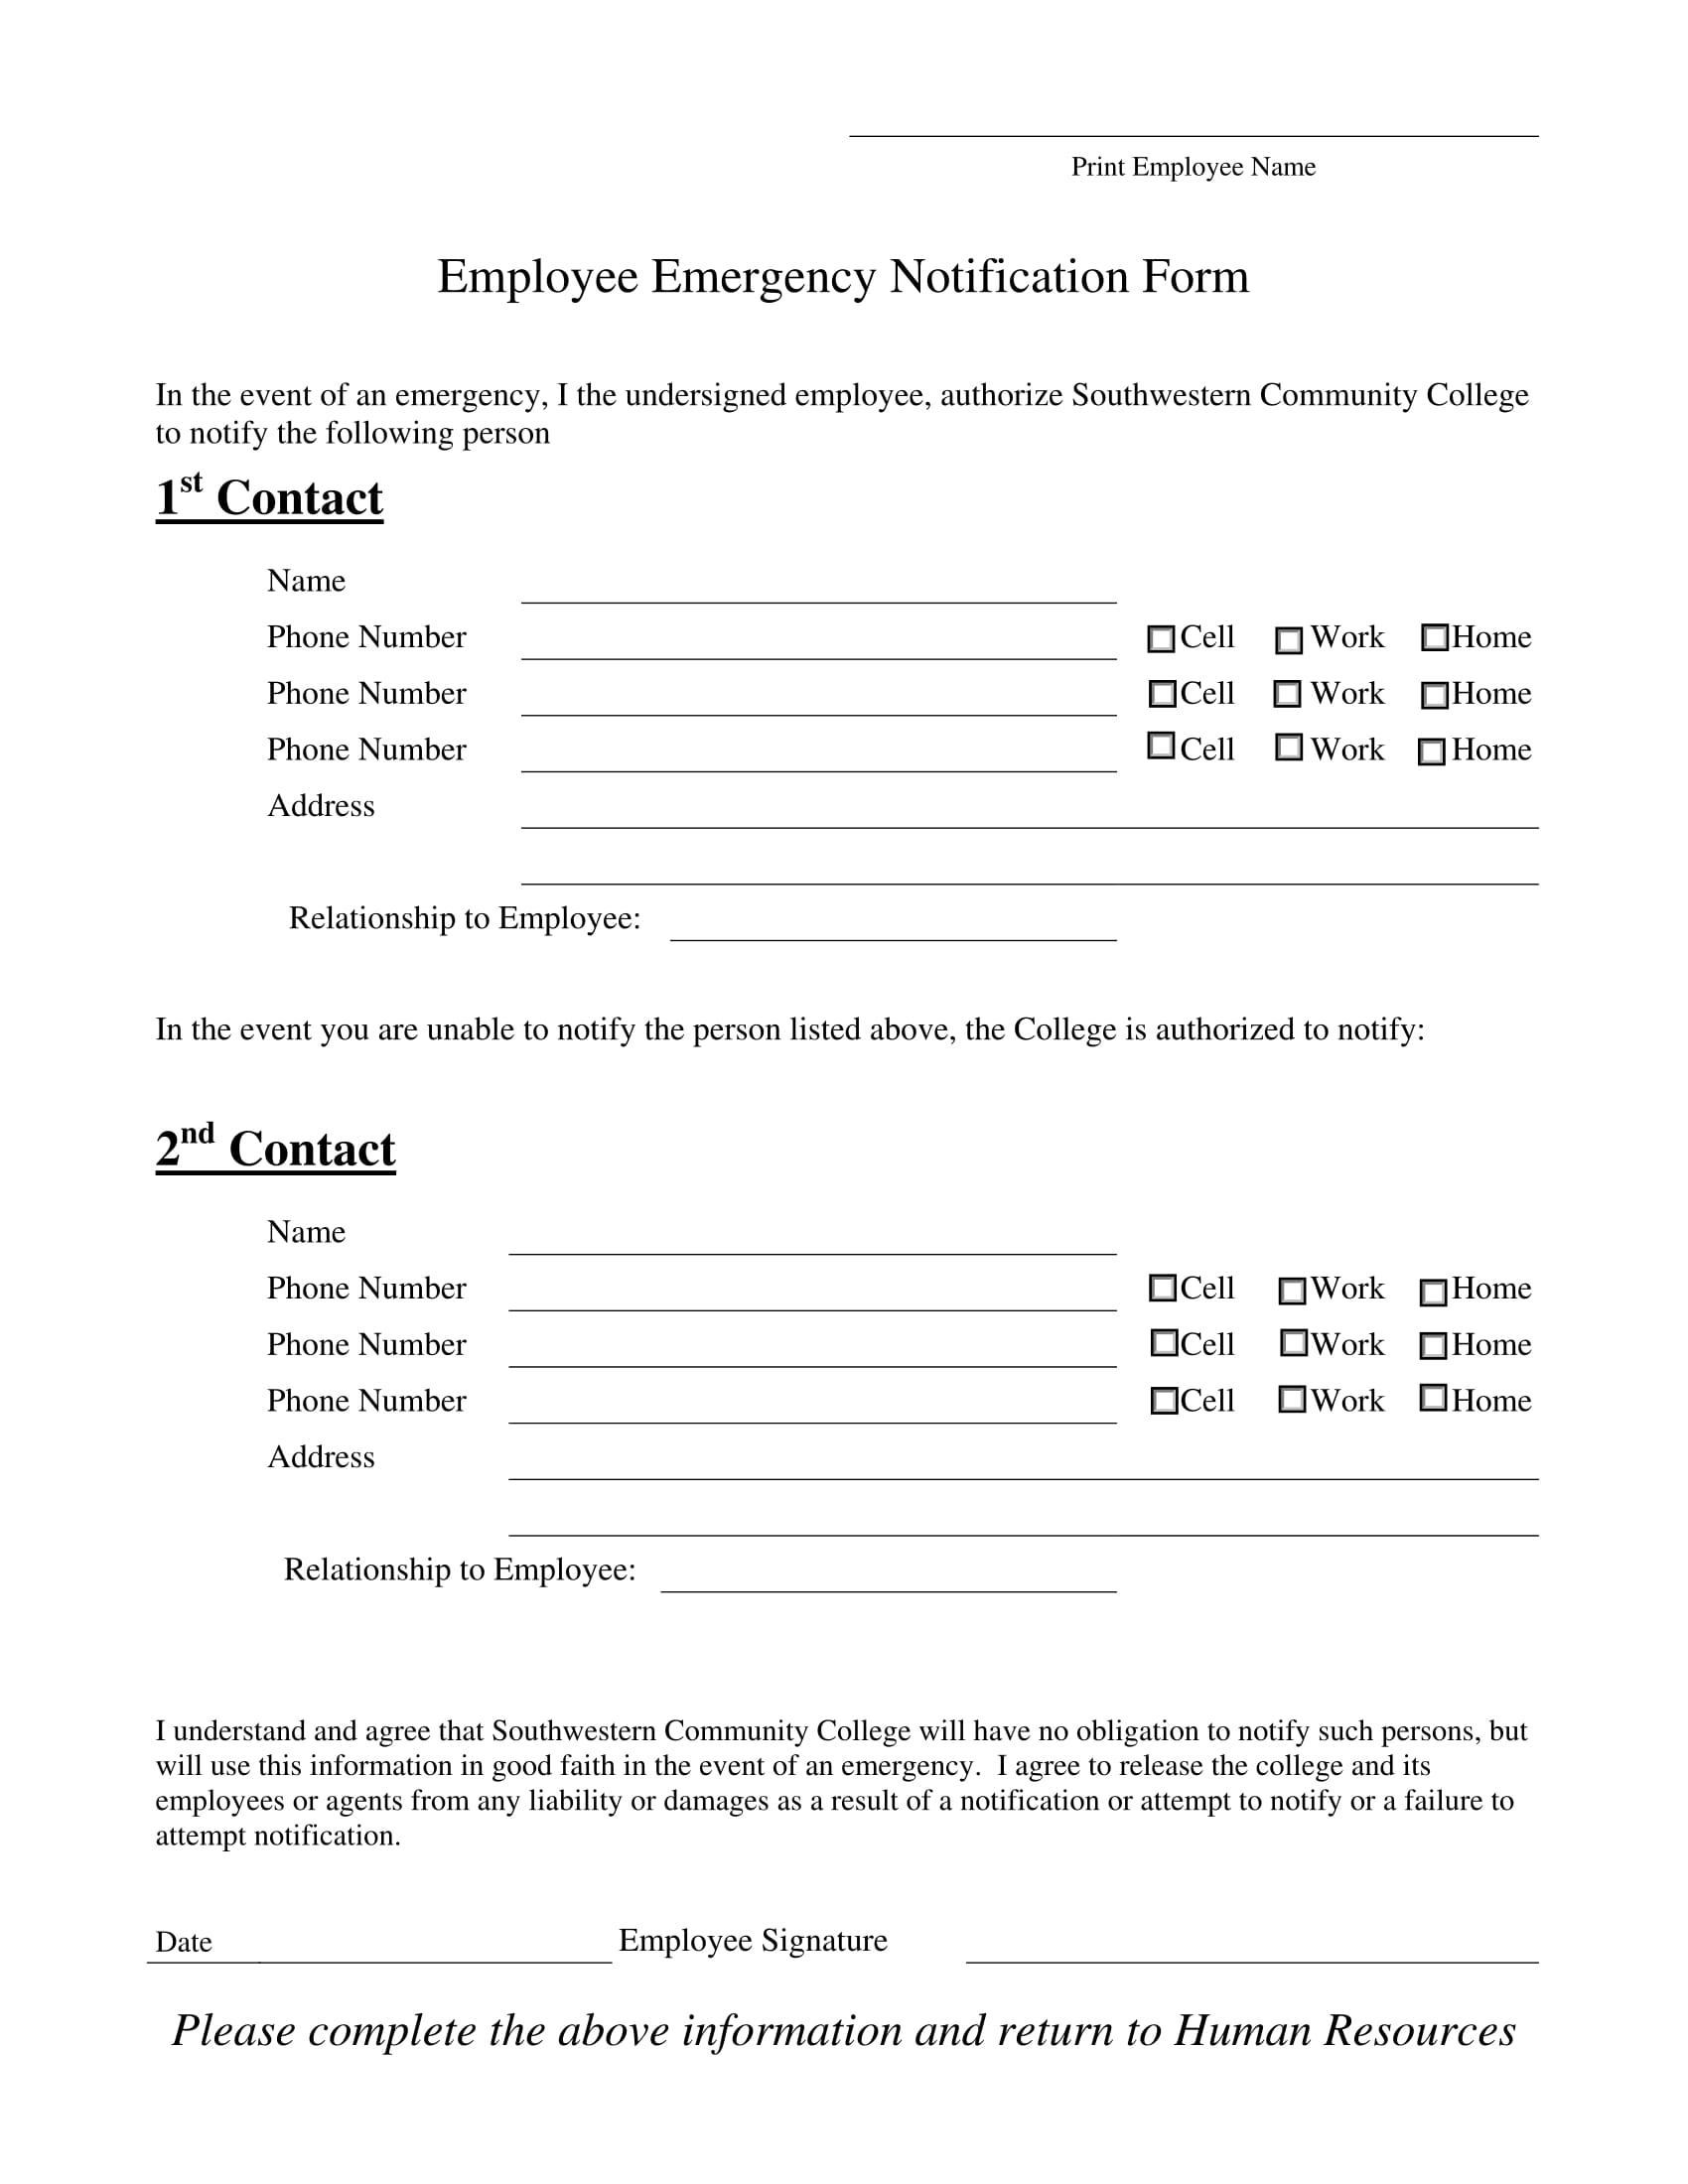 employee emergency notification form 1